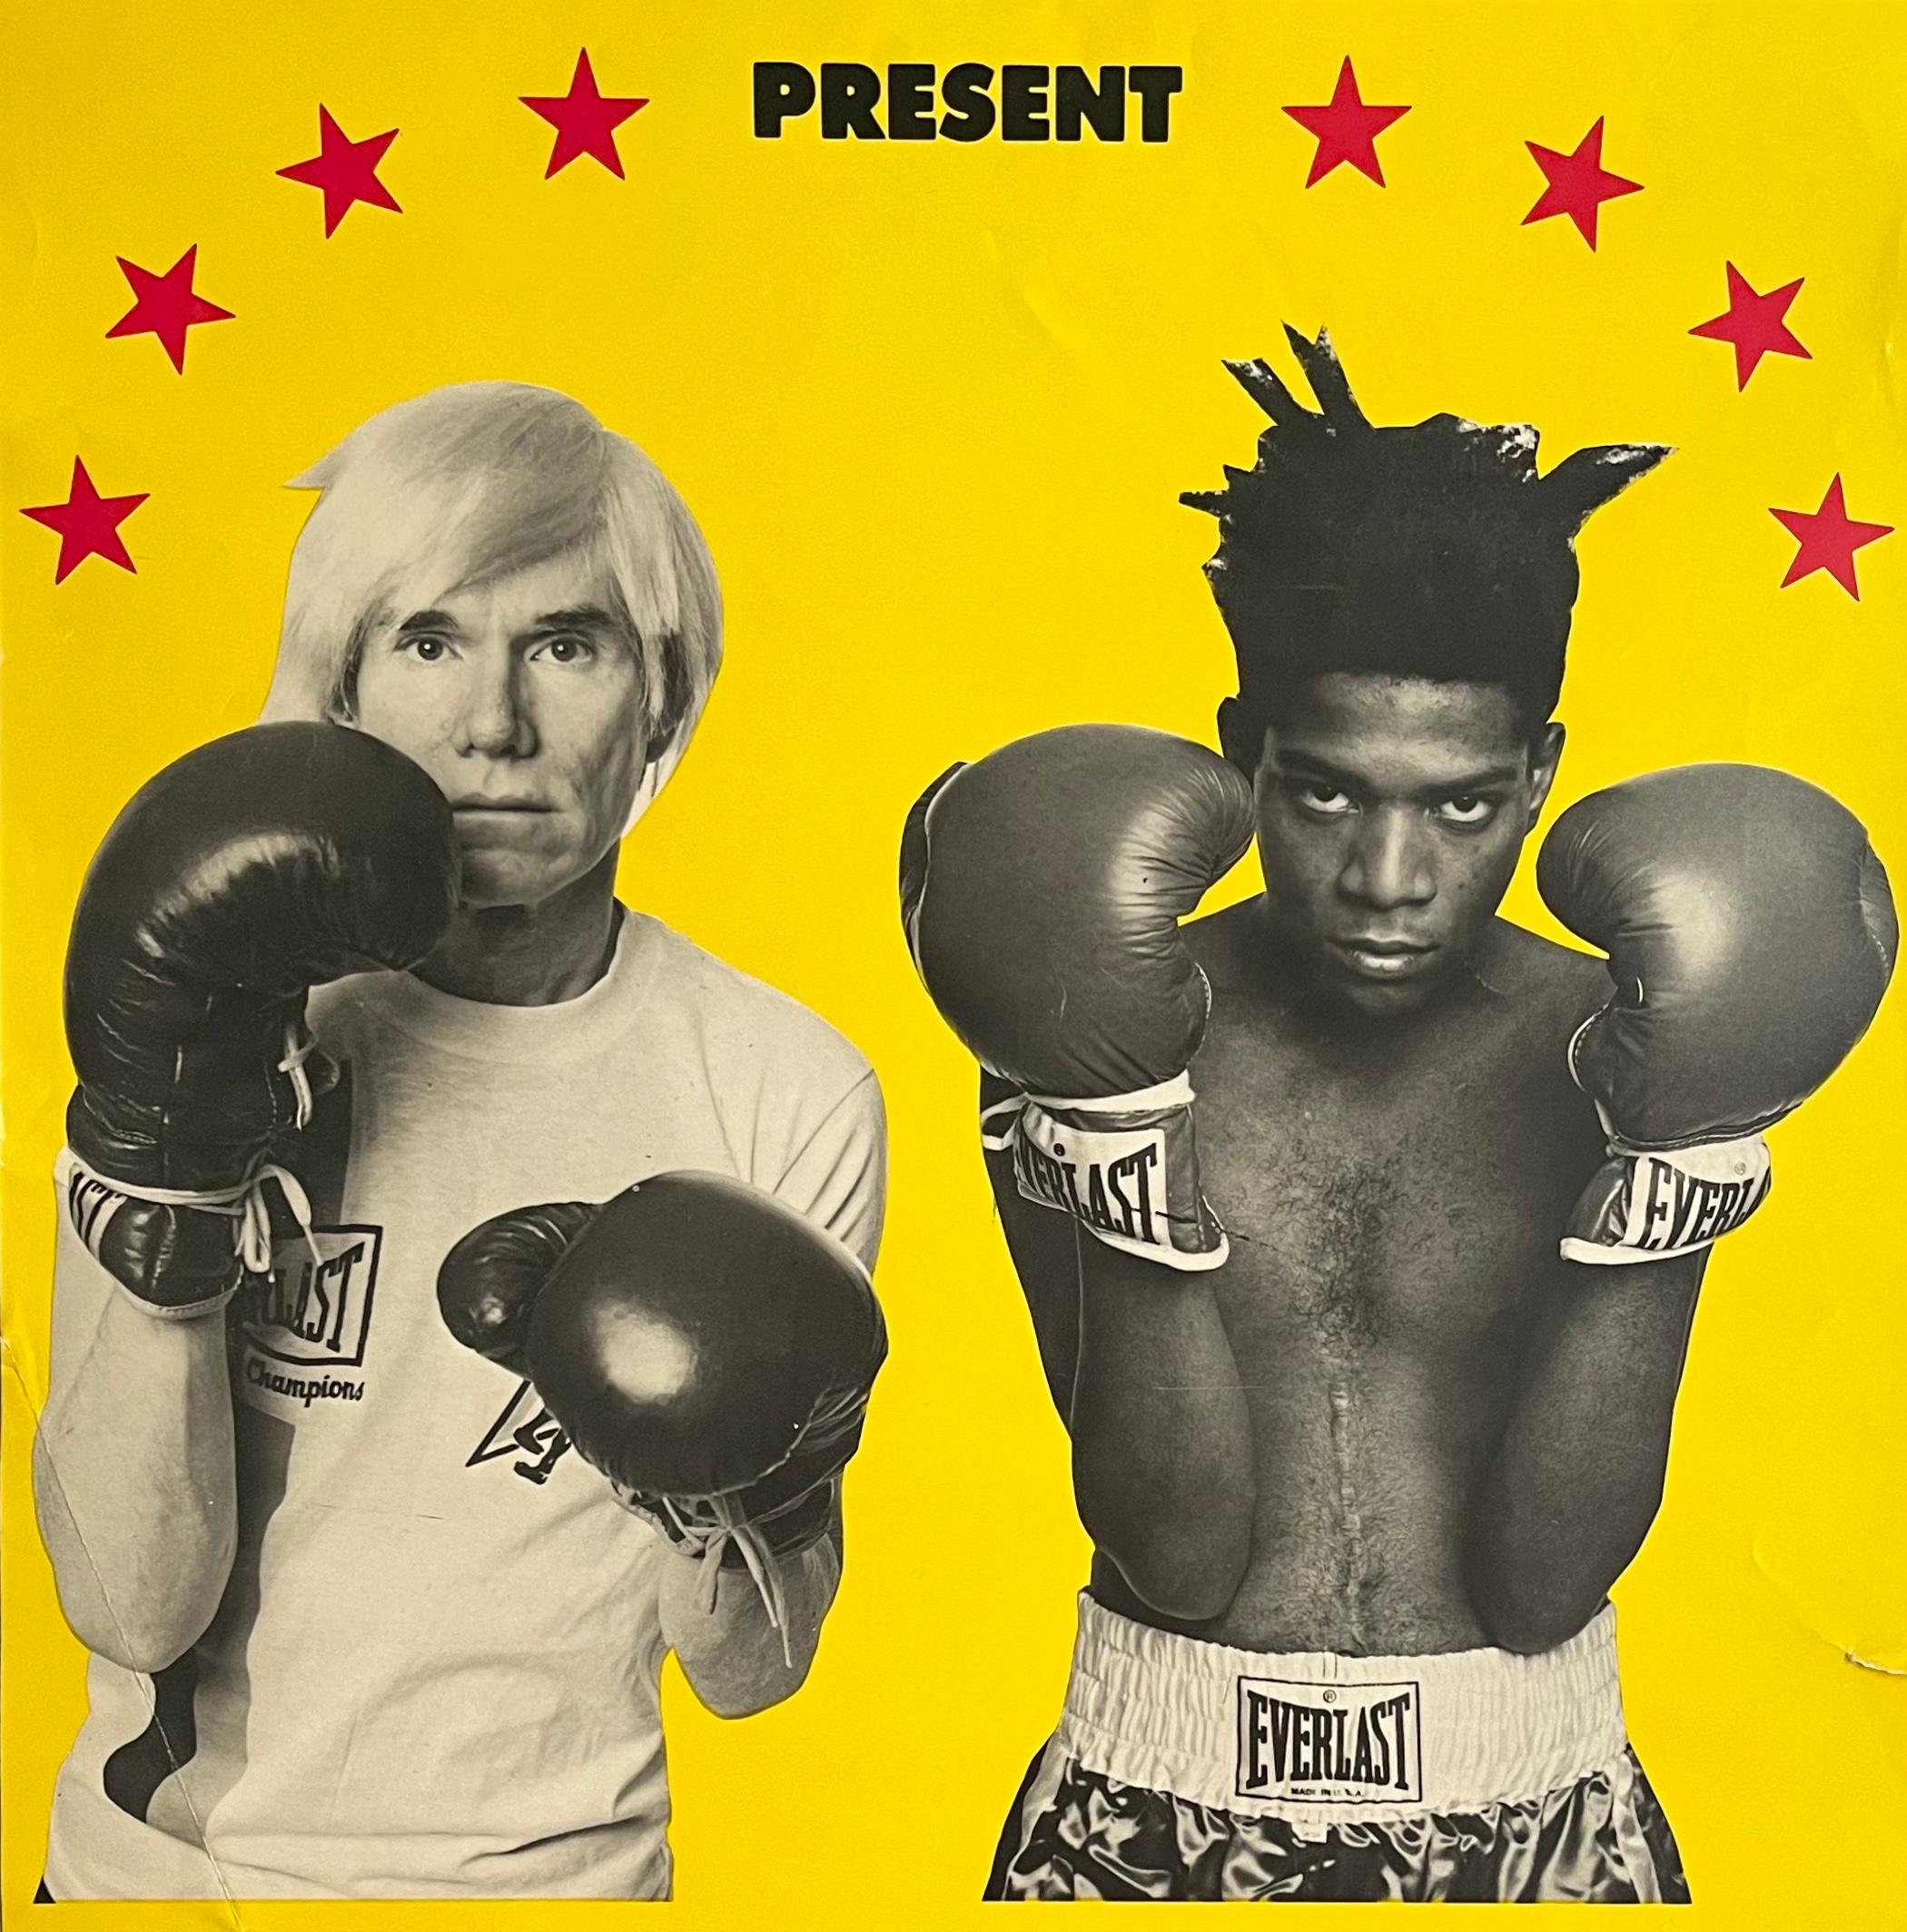 Warhol Basquiat Boxing Poster 1985 (Warhol Basquiat boxing 1985) - Print by Michael Halsband